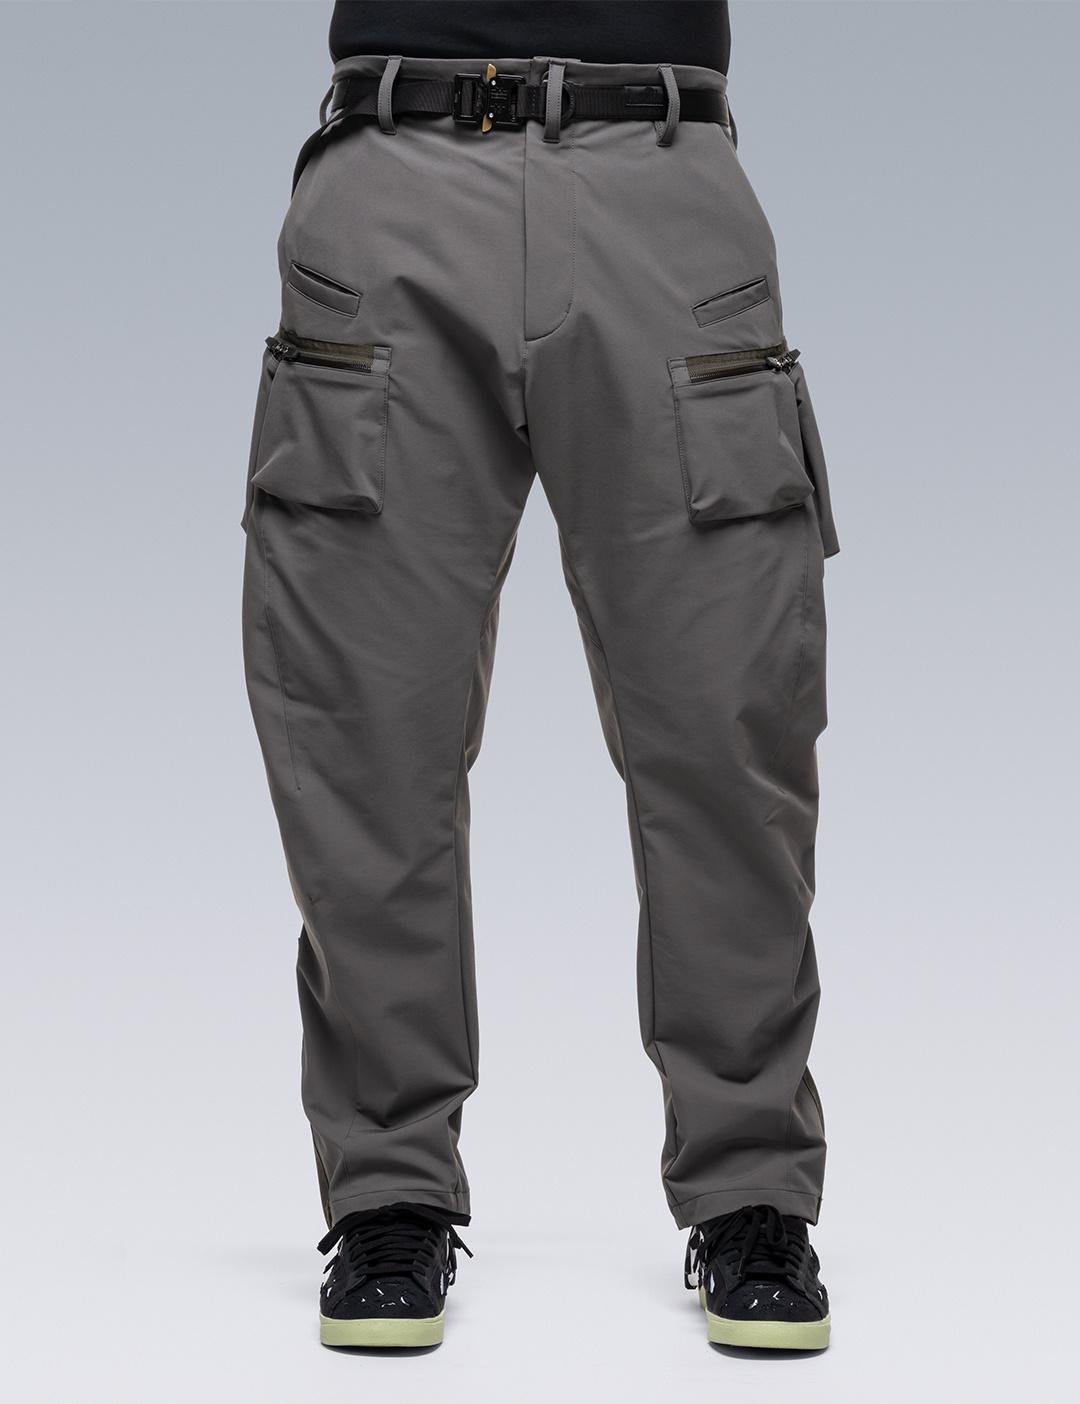 schoeller® Dryskin™ Articulated Cargo Pants Gen. 1 by ACRONYM | jellibeans